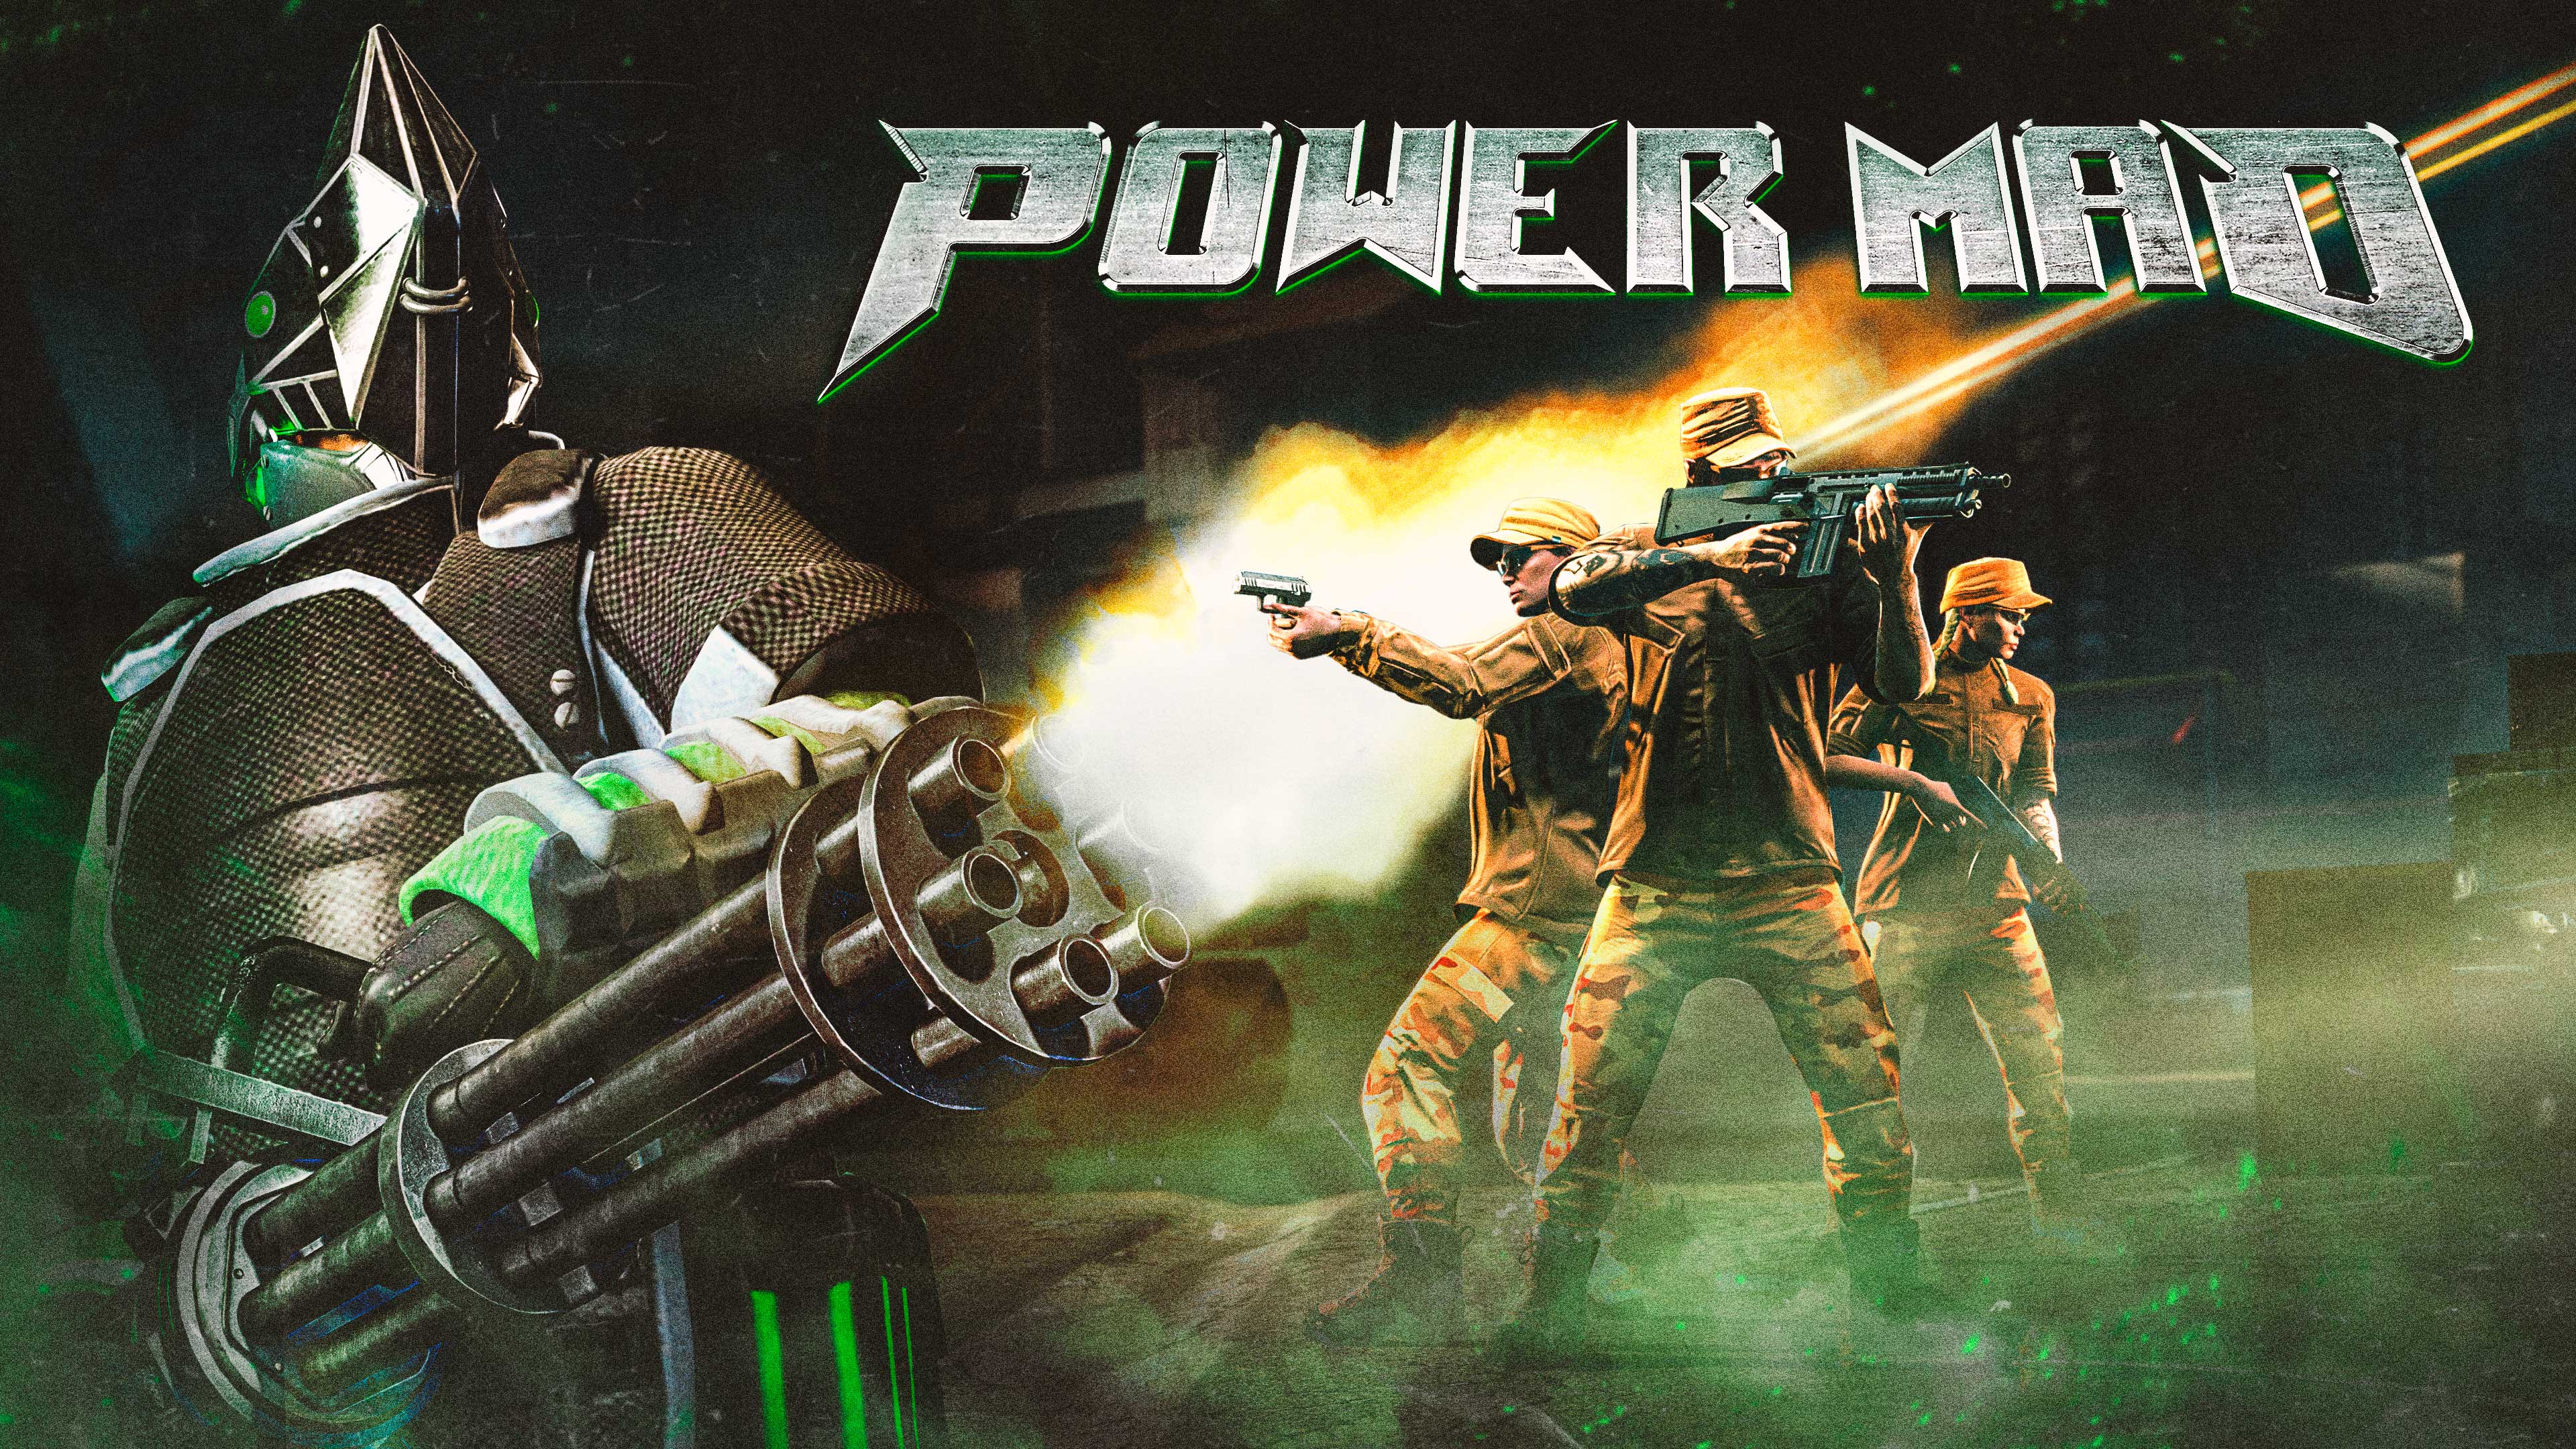 Power Mad screenshot and logo